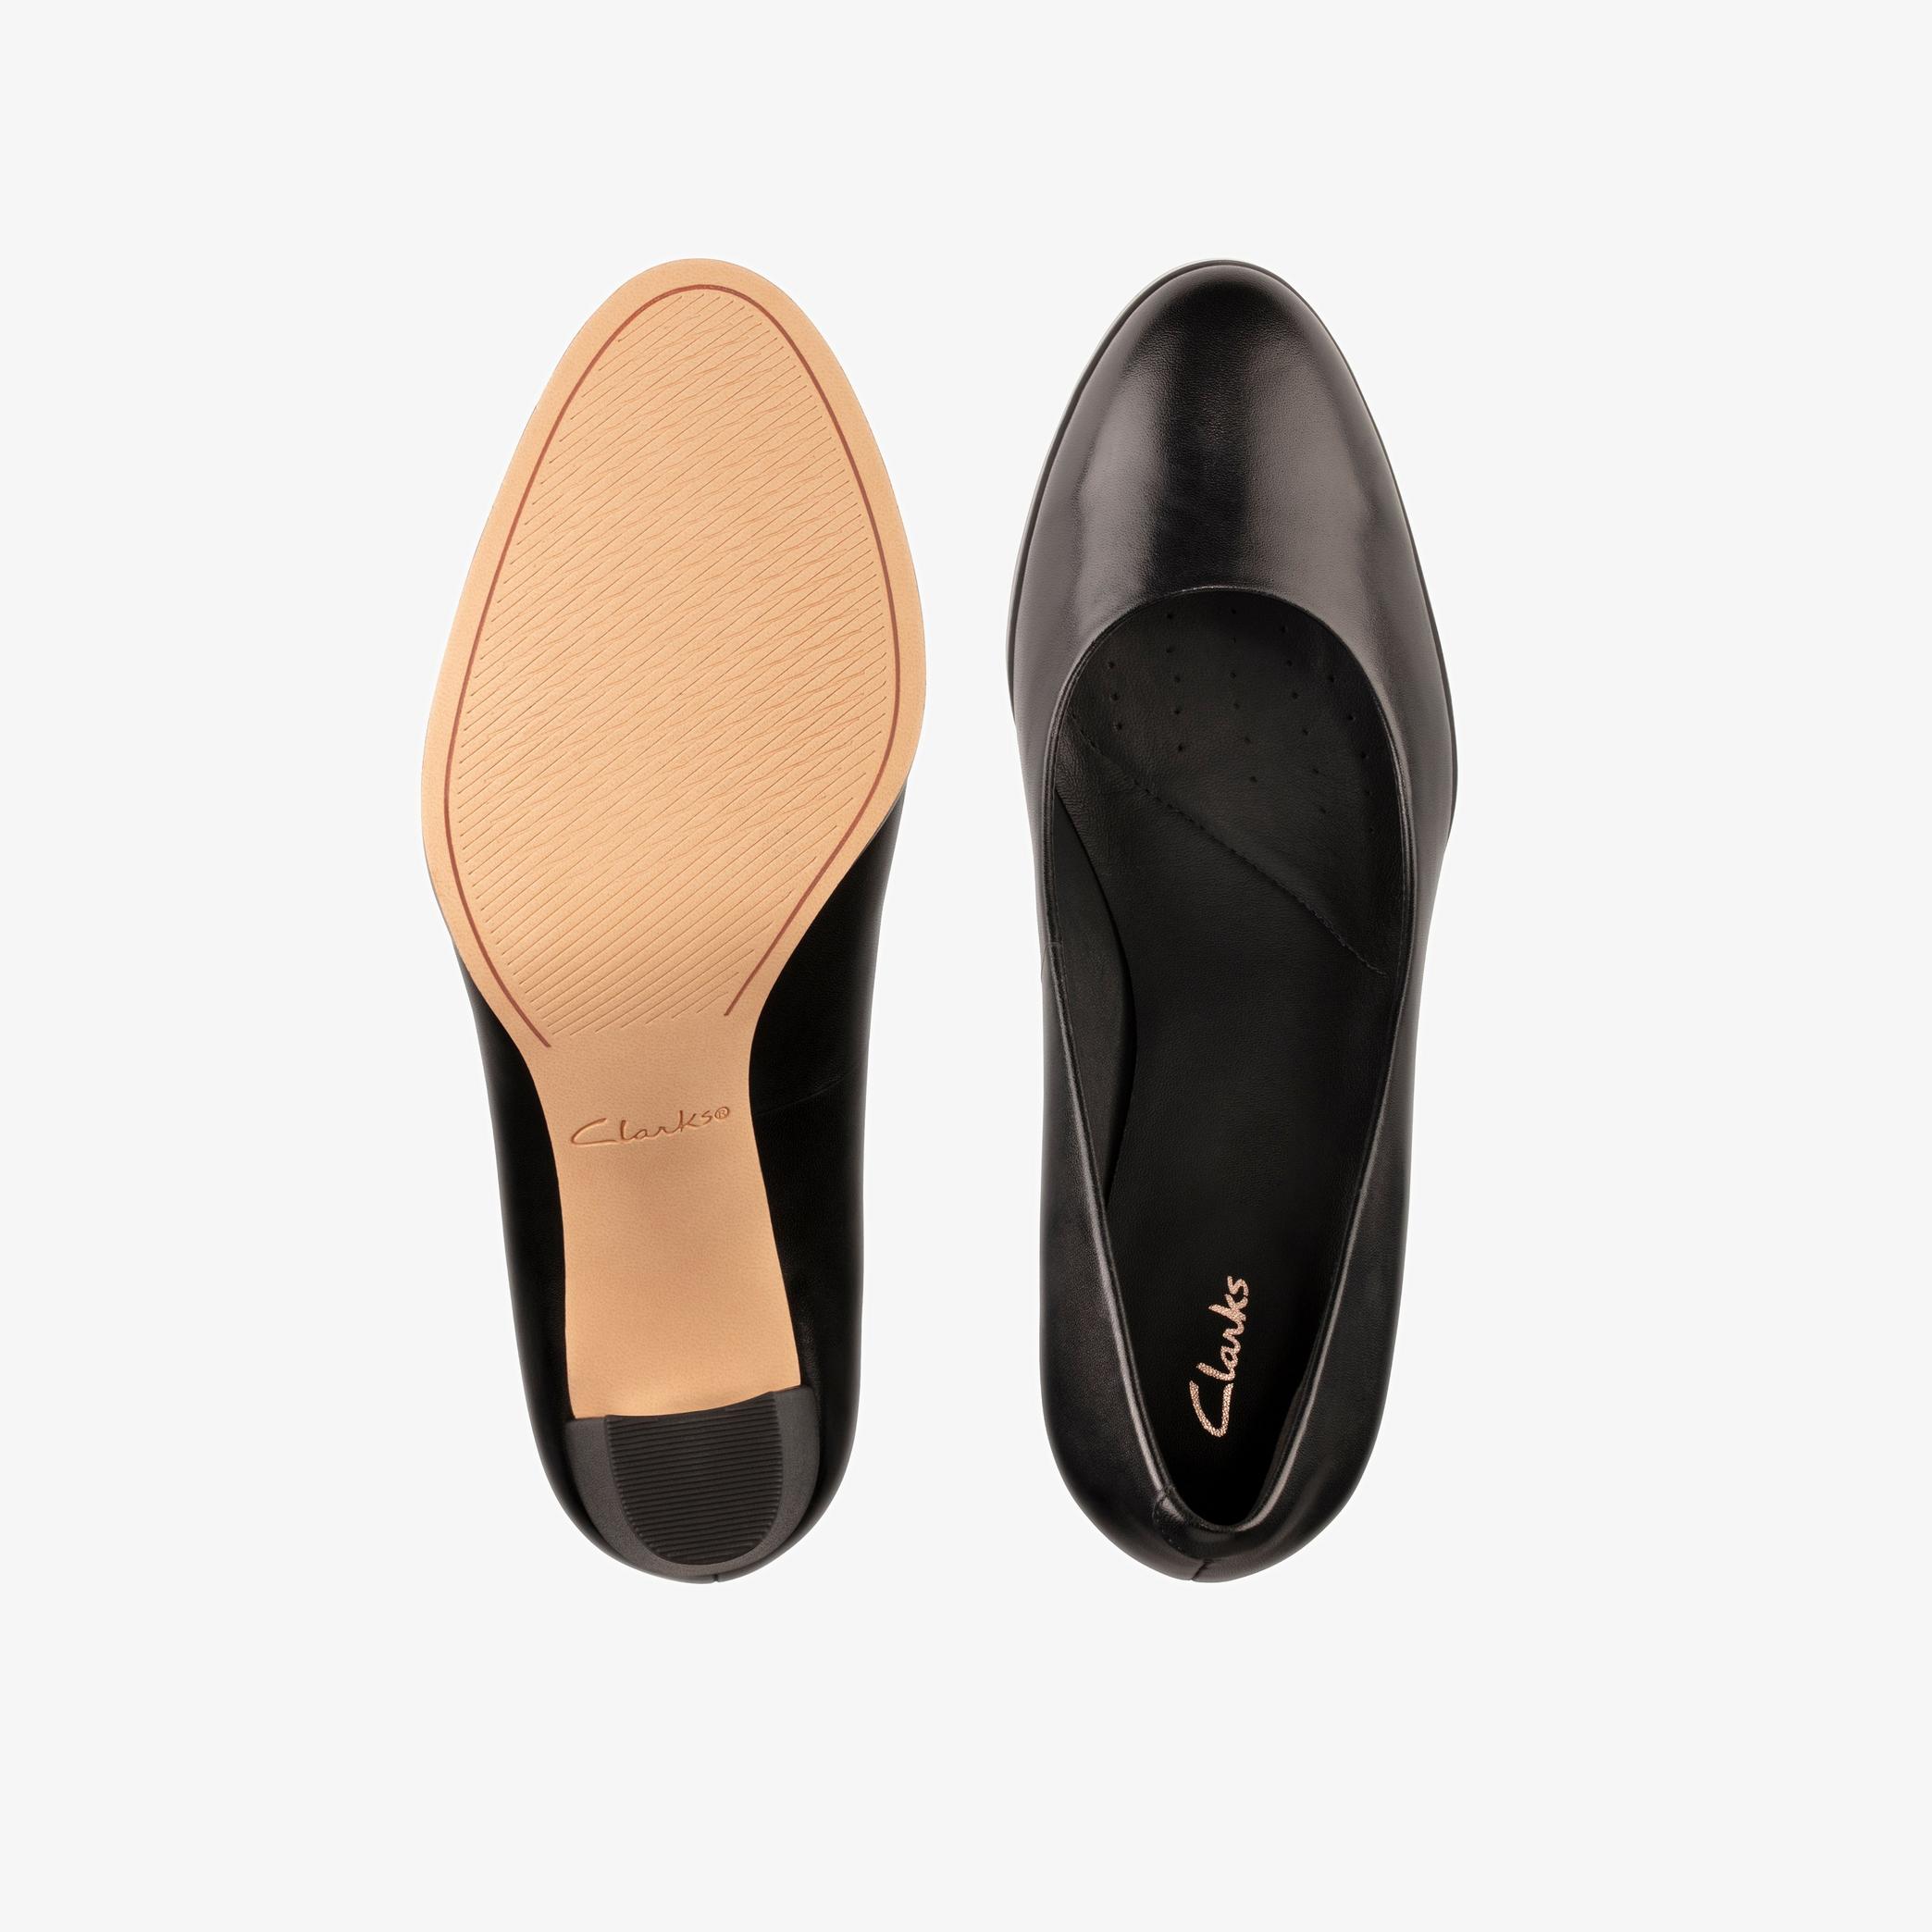 Kaylin Cara 2 Black Leather High Heels, view 6 of 6